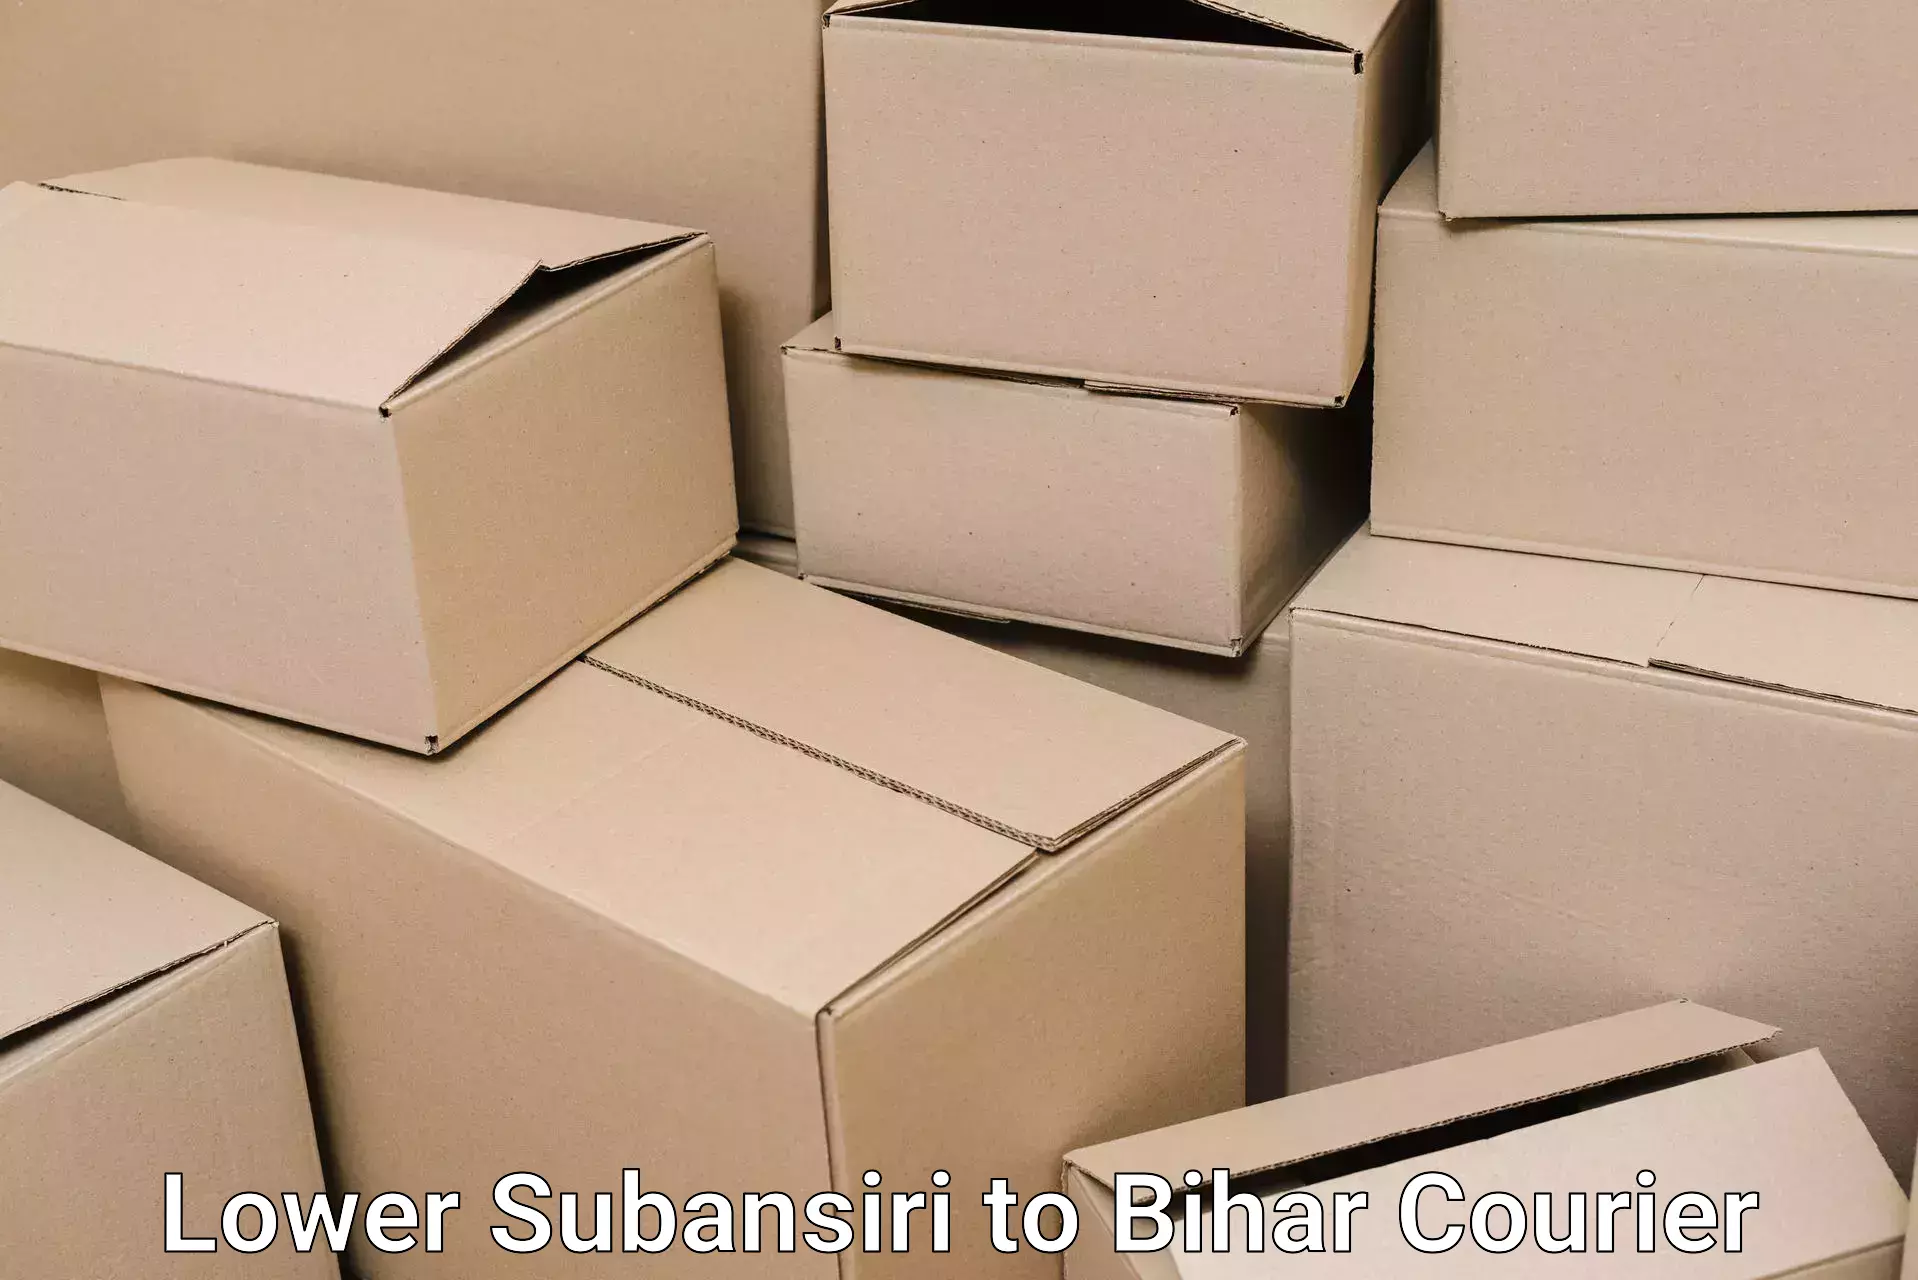 Professional moving company in Lower Subansiri to Mahnar Bazar